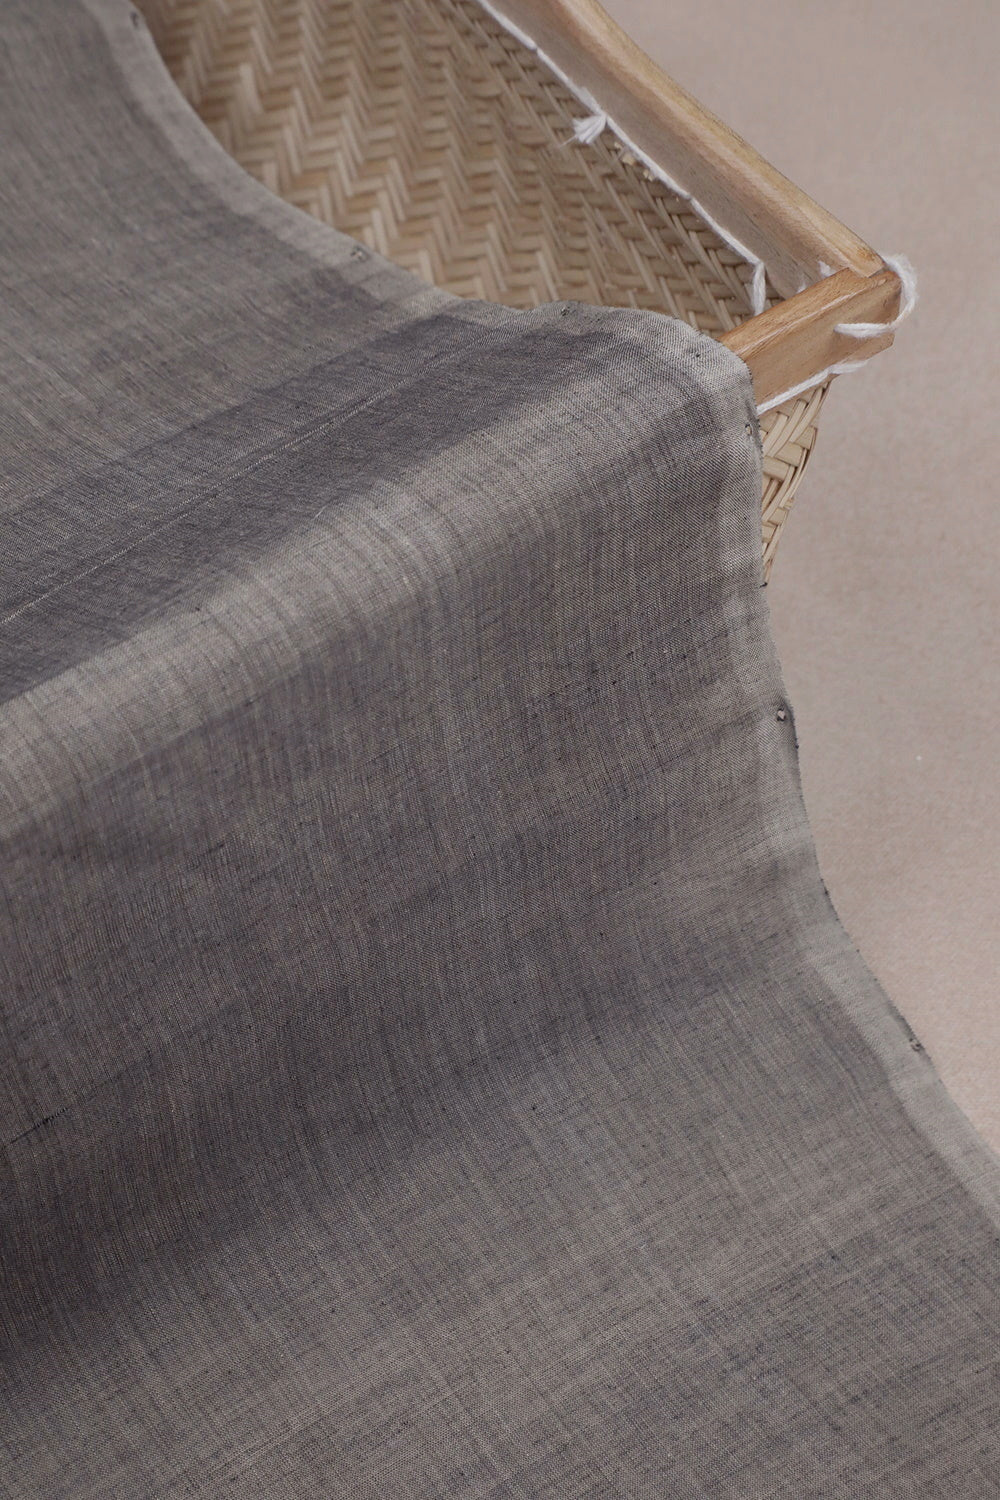 Double Shaded Grey Handwoven Plain Mangalagiri Cotton Fabric